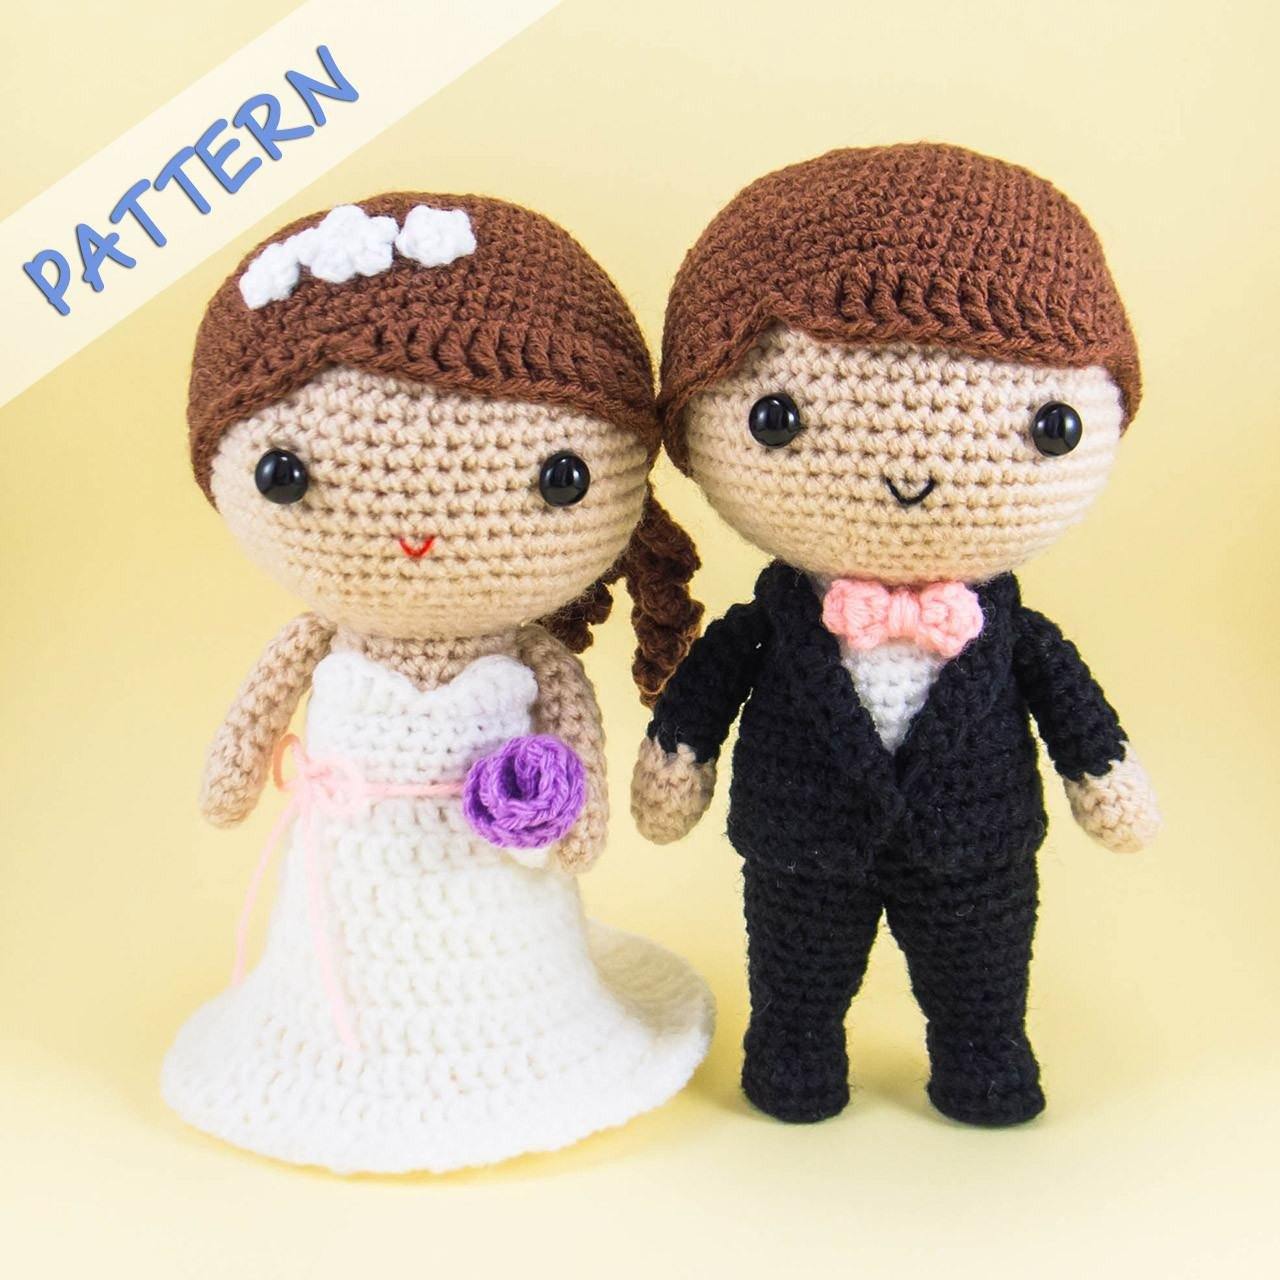 Bride and Groom Crochet Amigurumi Pattern